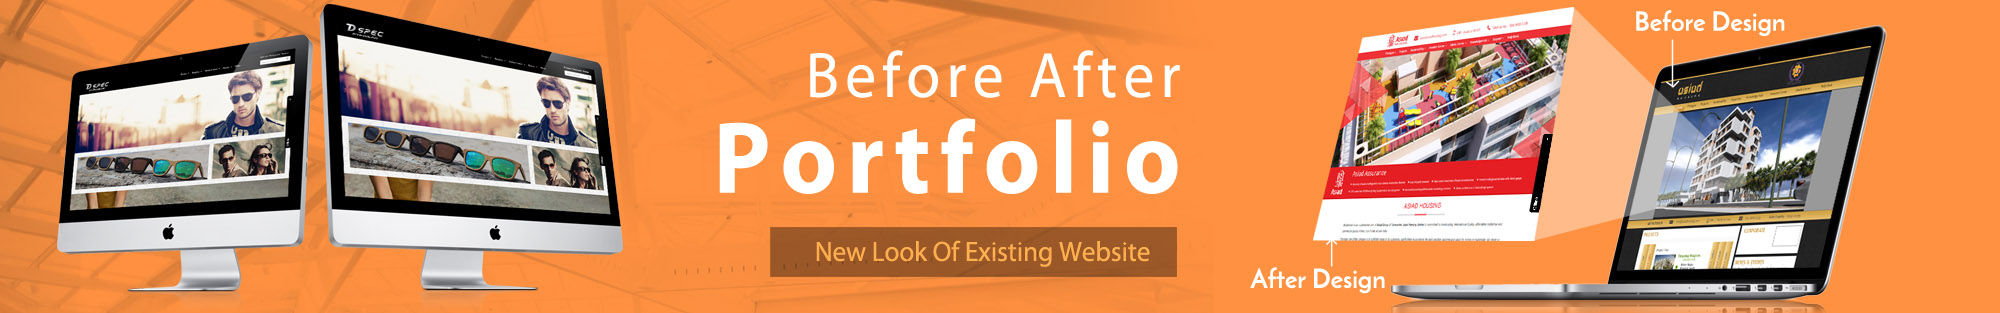 After Before Web Design Portfolio